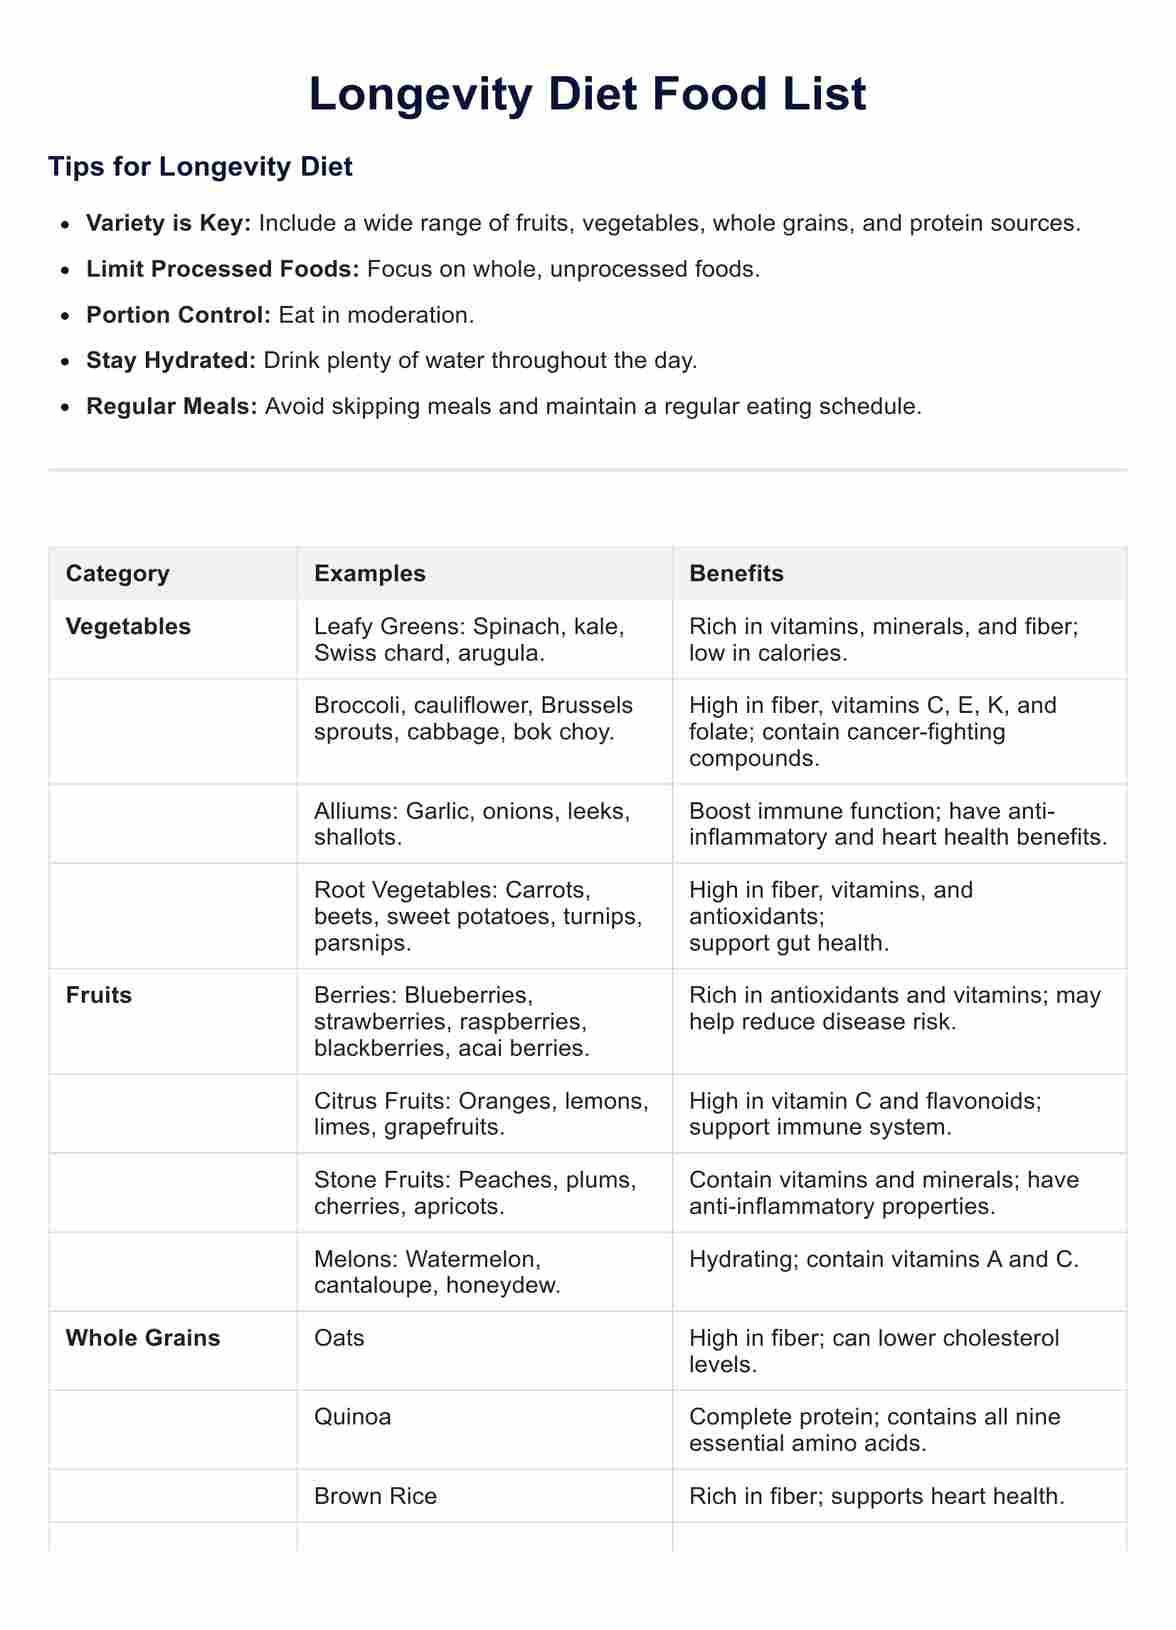 Longevity Diet Food List PDF Example